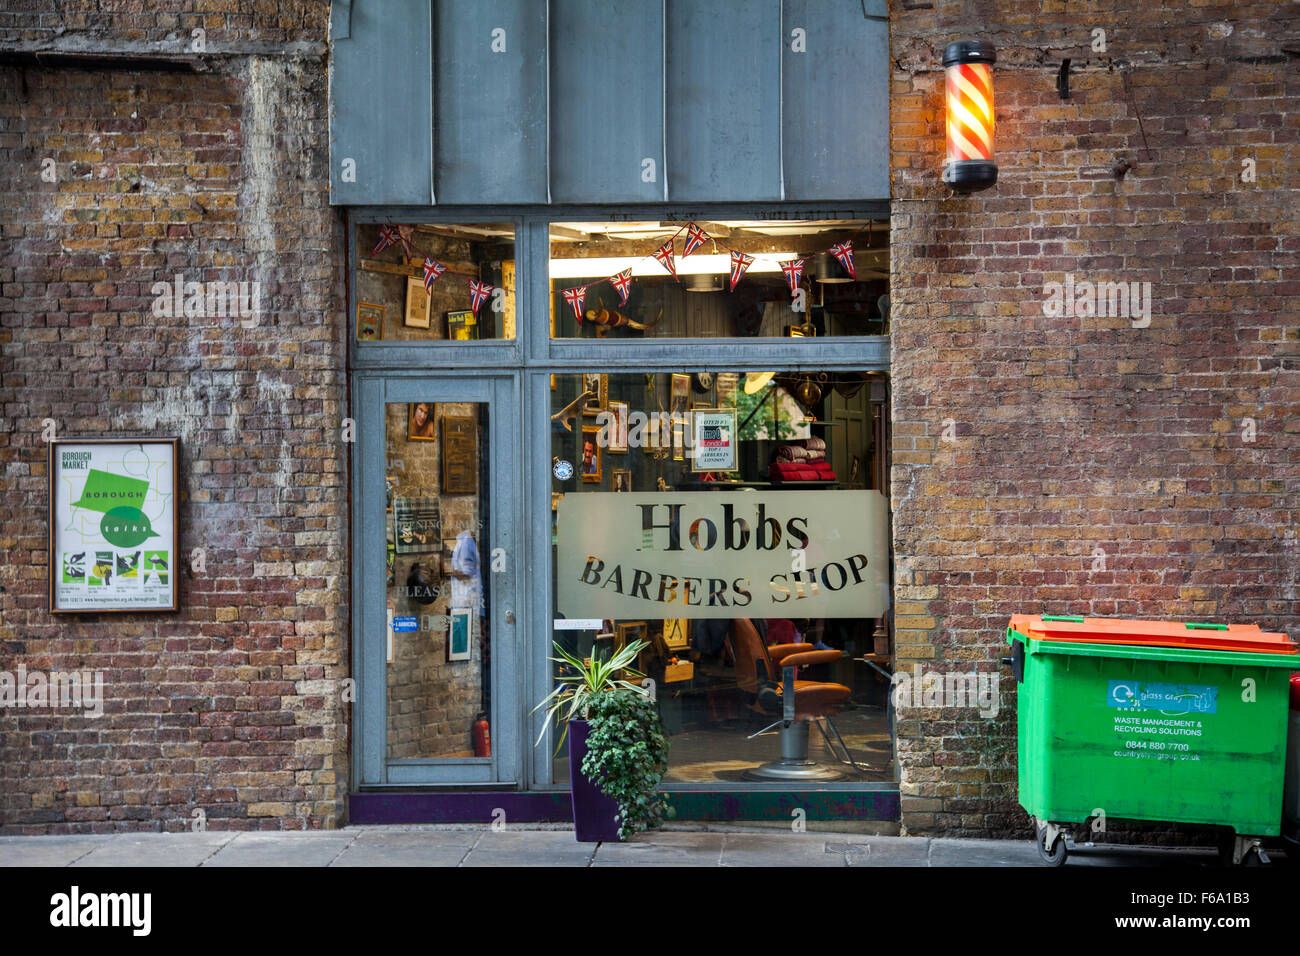 Hobbs barbers shop, Borough Market, London, England, U.K. Stock Photo